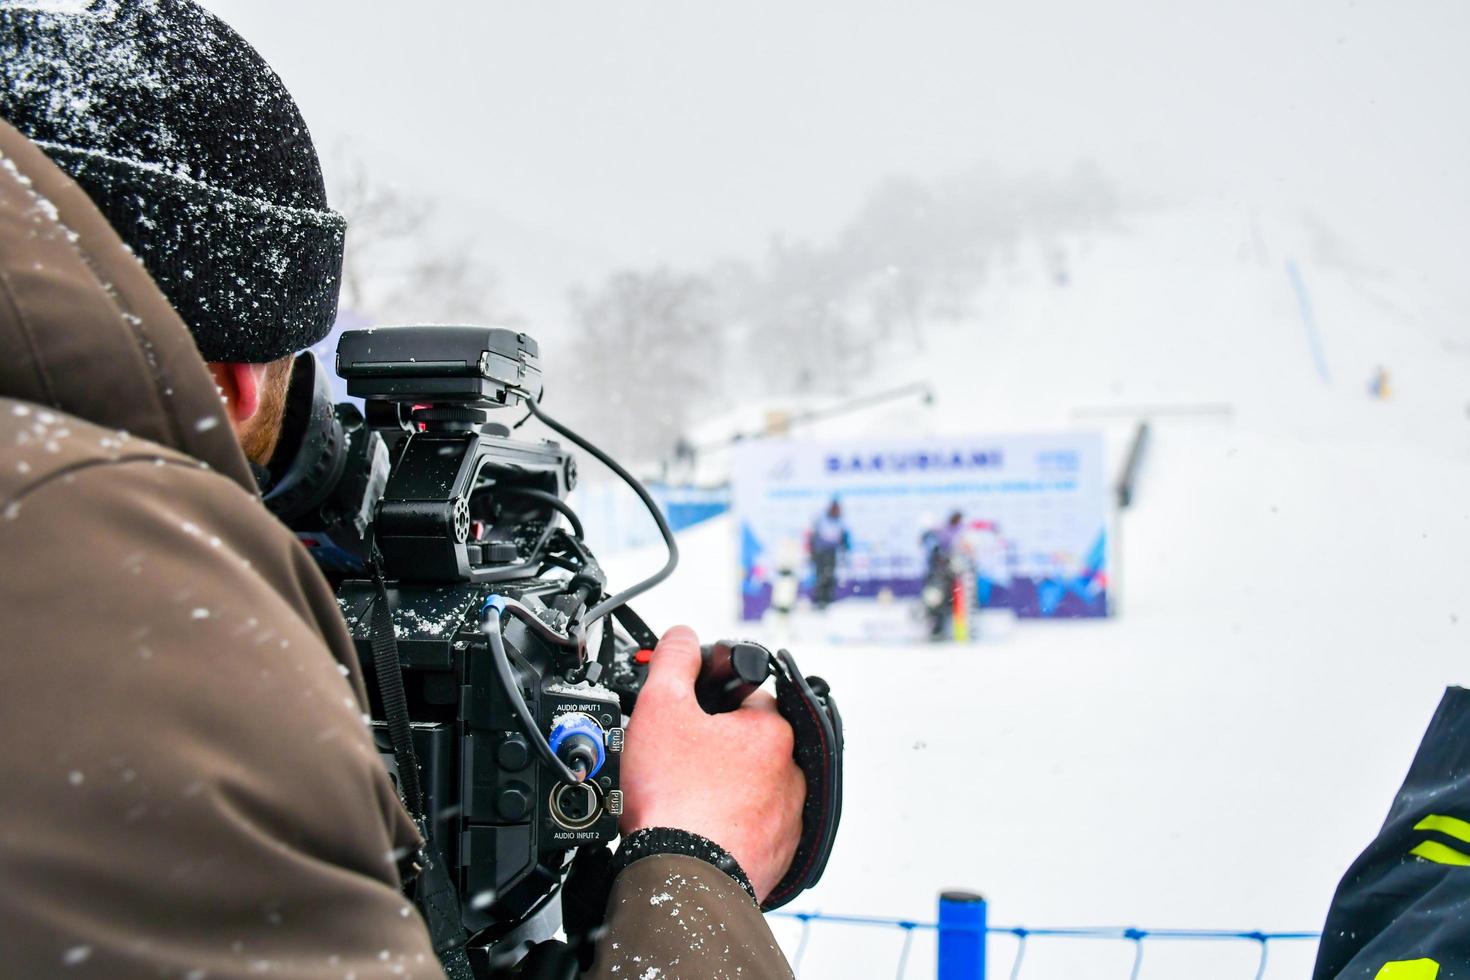 cameraman film skiwedstrijd in skigebied in extreem sneeuwkoude omstandigheden foto